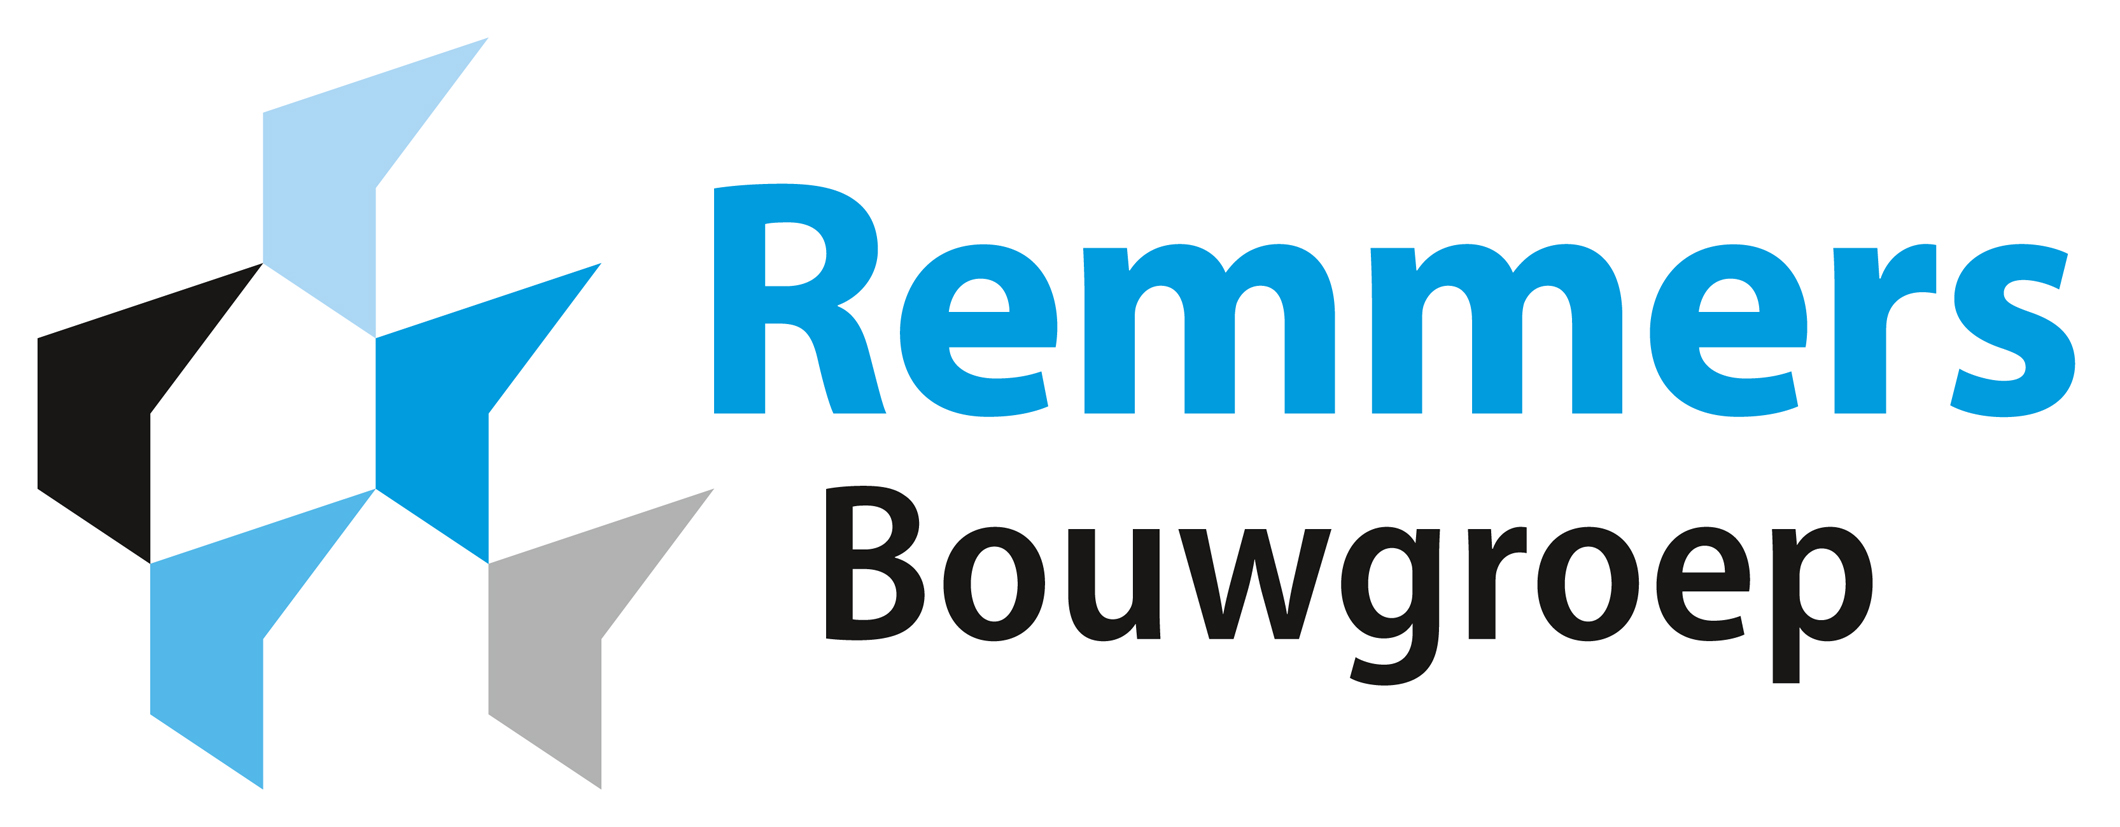 Remmers Bouwgroep